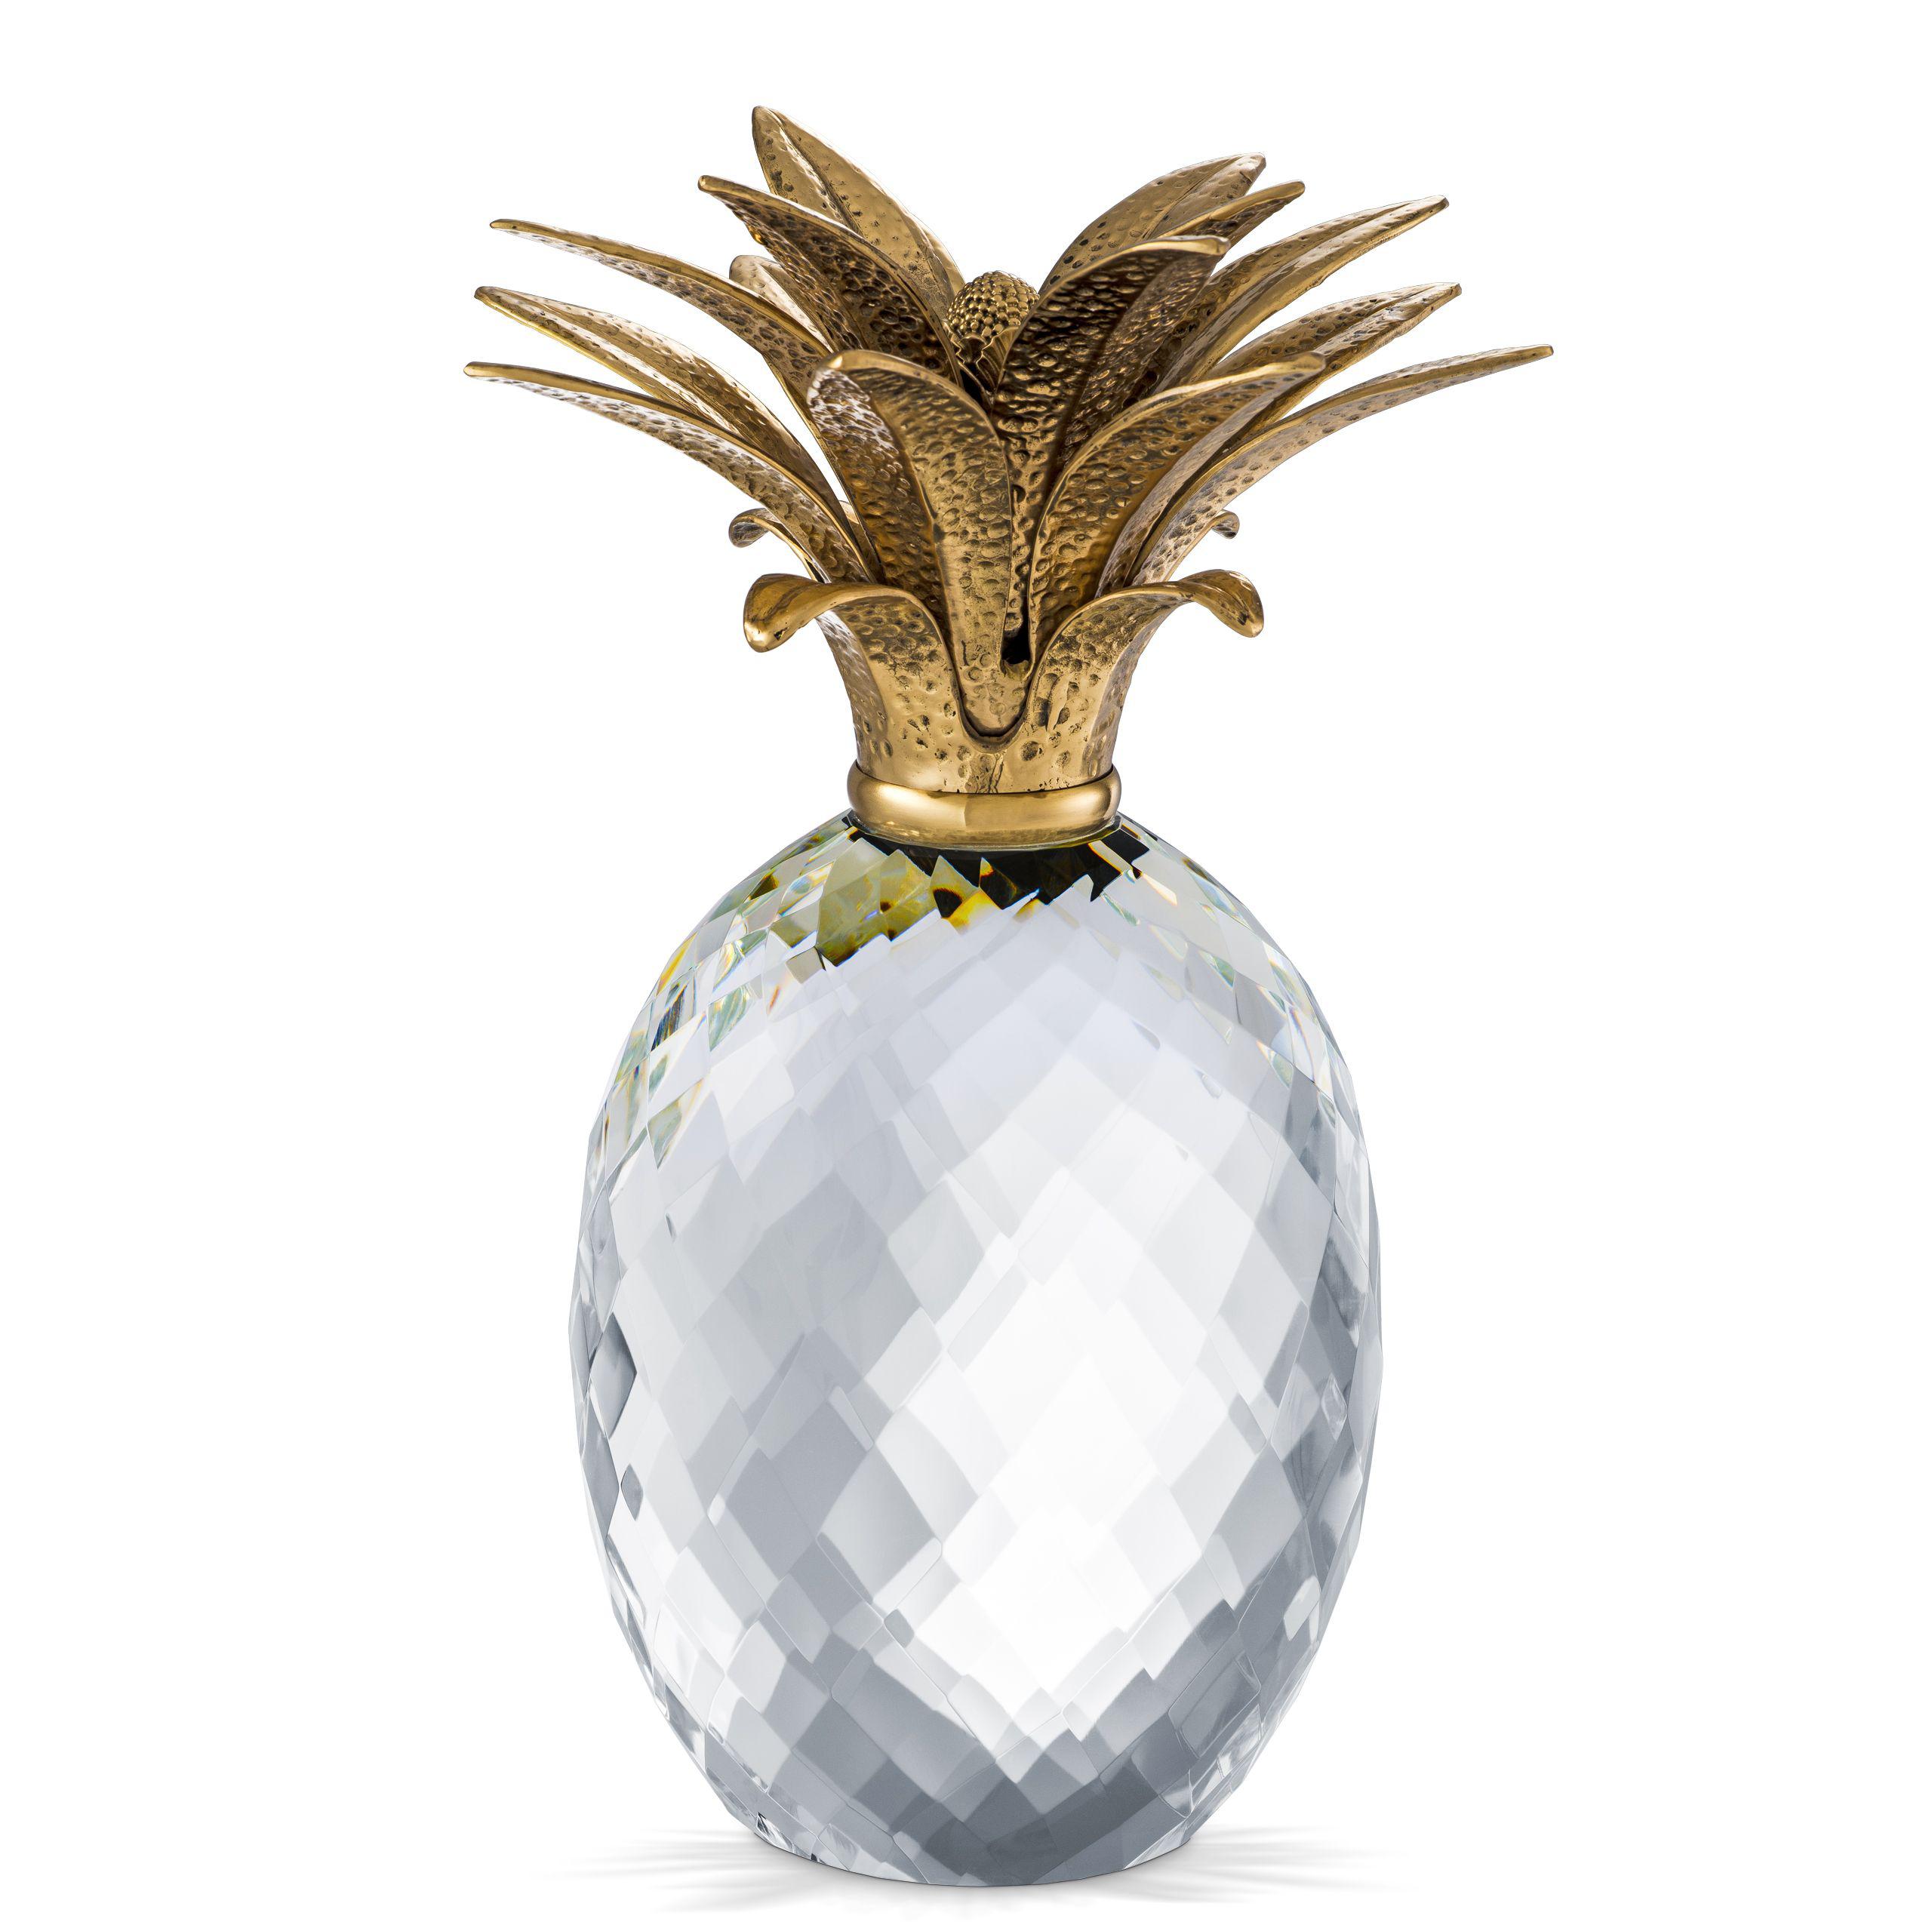 Купить Статуэтка Object Pineapple в интернет-магазине roooms.ru